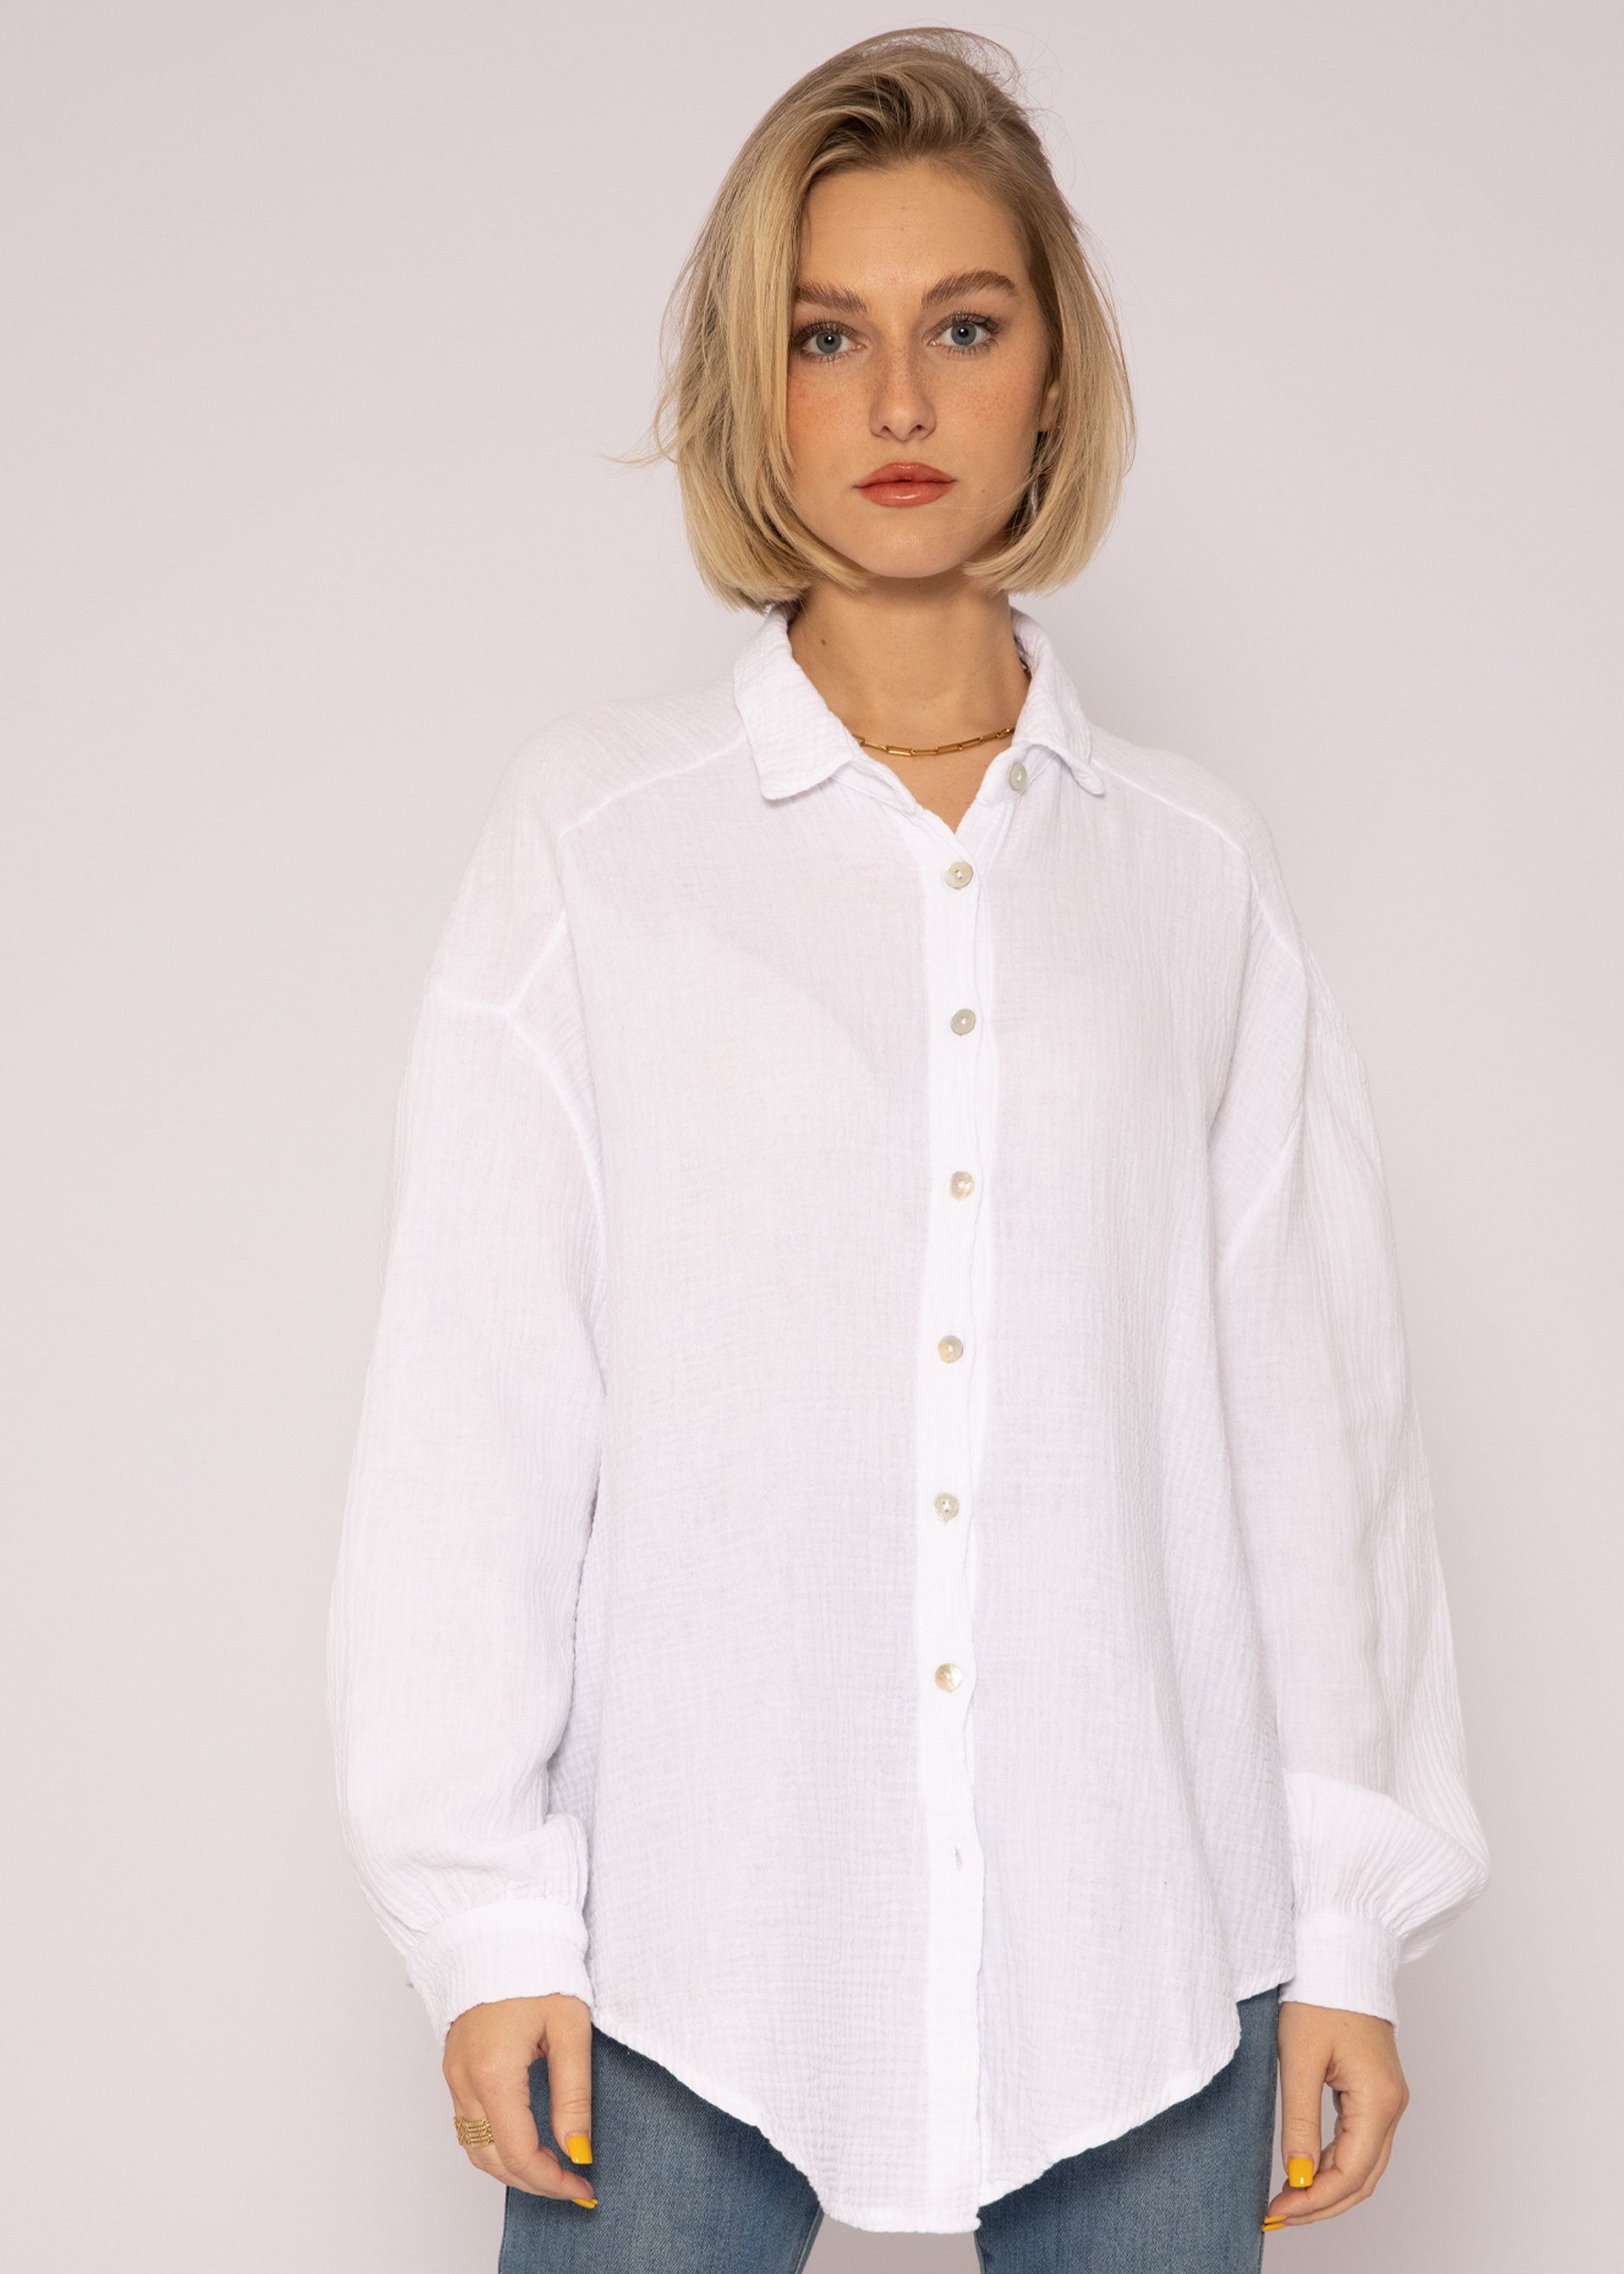 SASSYCLASSY Longbluse Oversize Musselin Bluse Damen Langarm Hemdbluse lang aus Baumwolle mit V-Ausschnitt, One Size (Gr. 36-48) Weiß